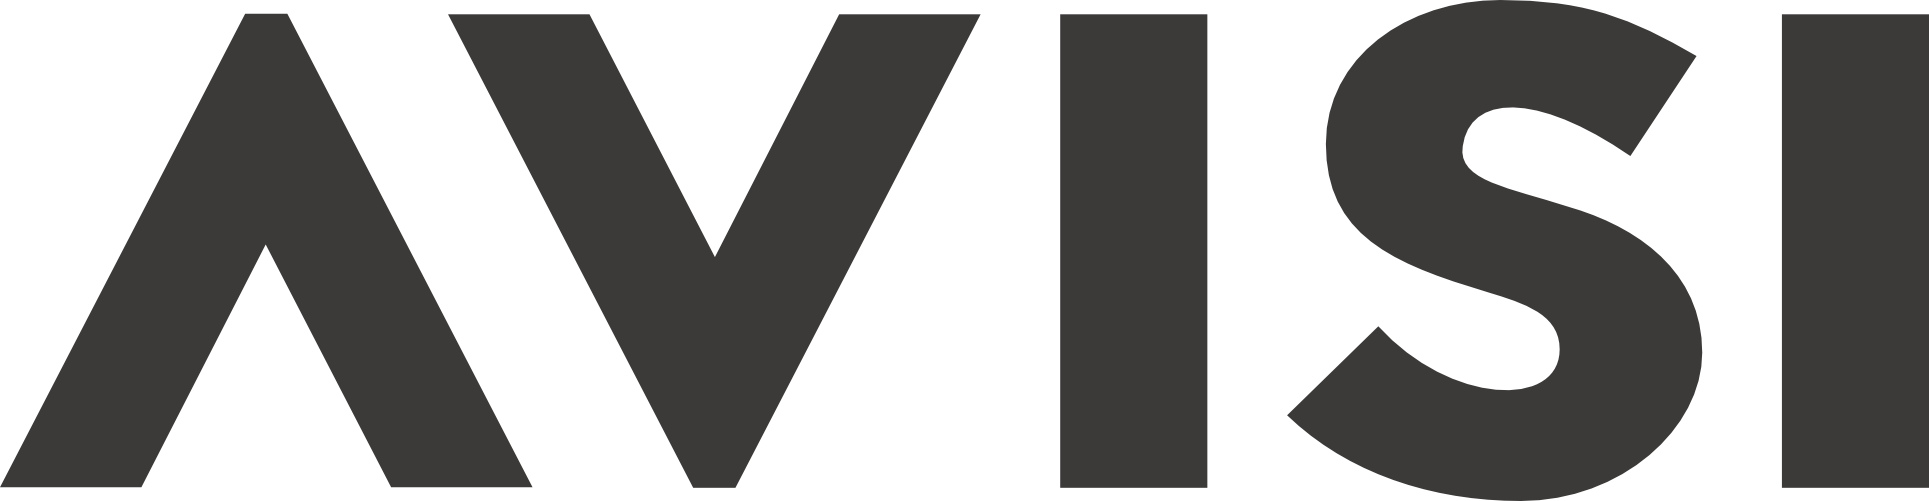 Logo Avisi